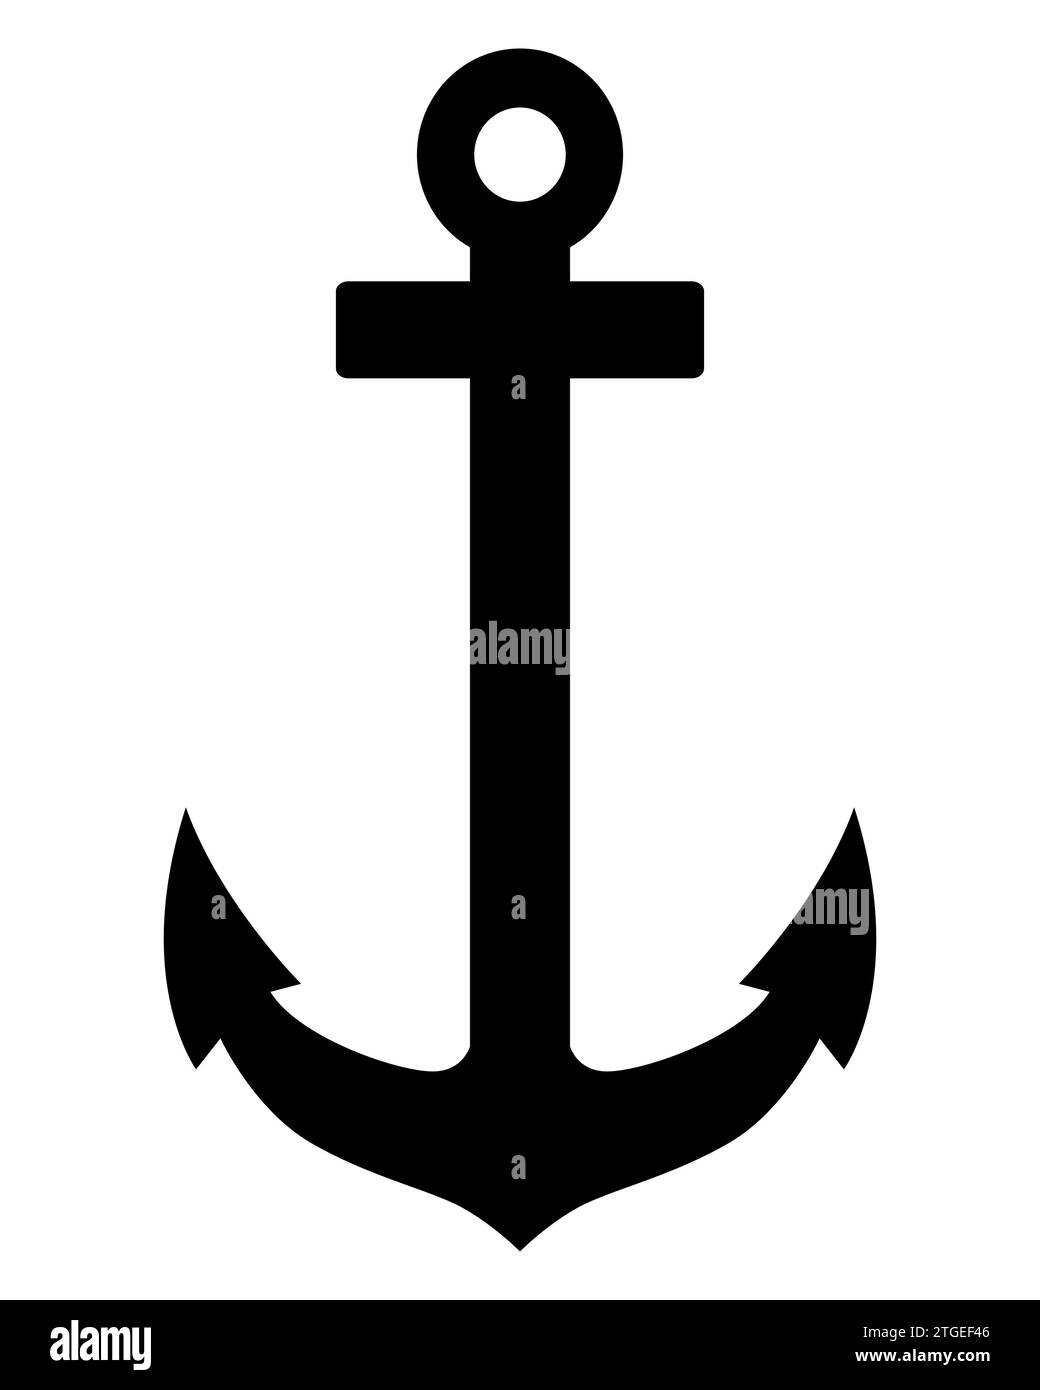 anchor silhouette symbol shape, black and white vector illustration Stock Vector